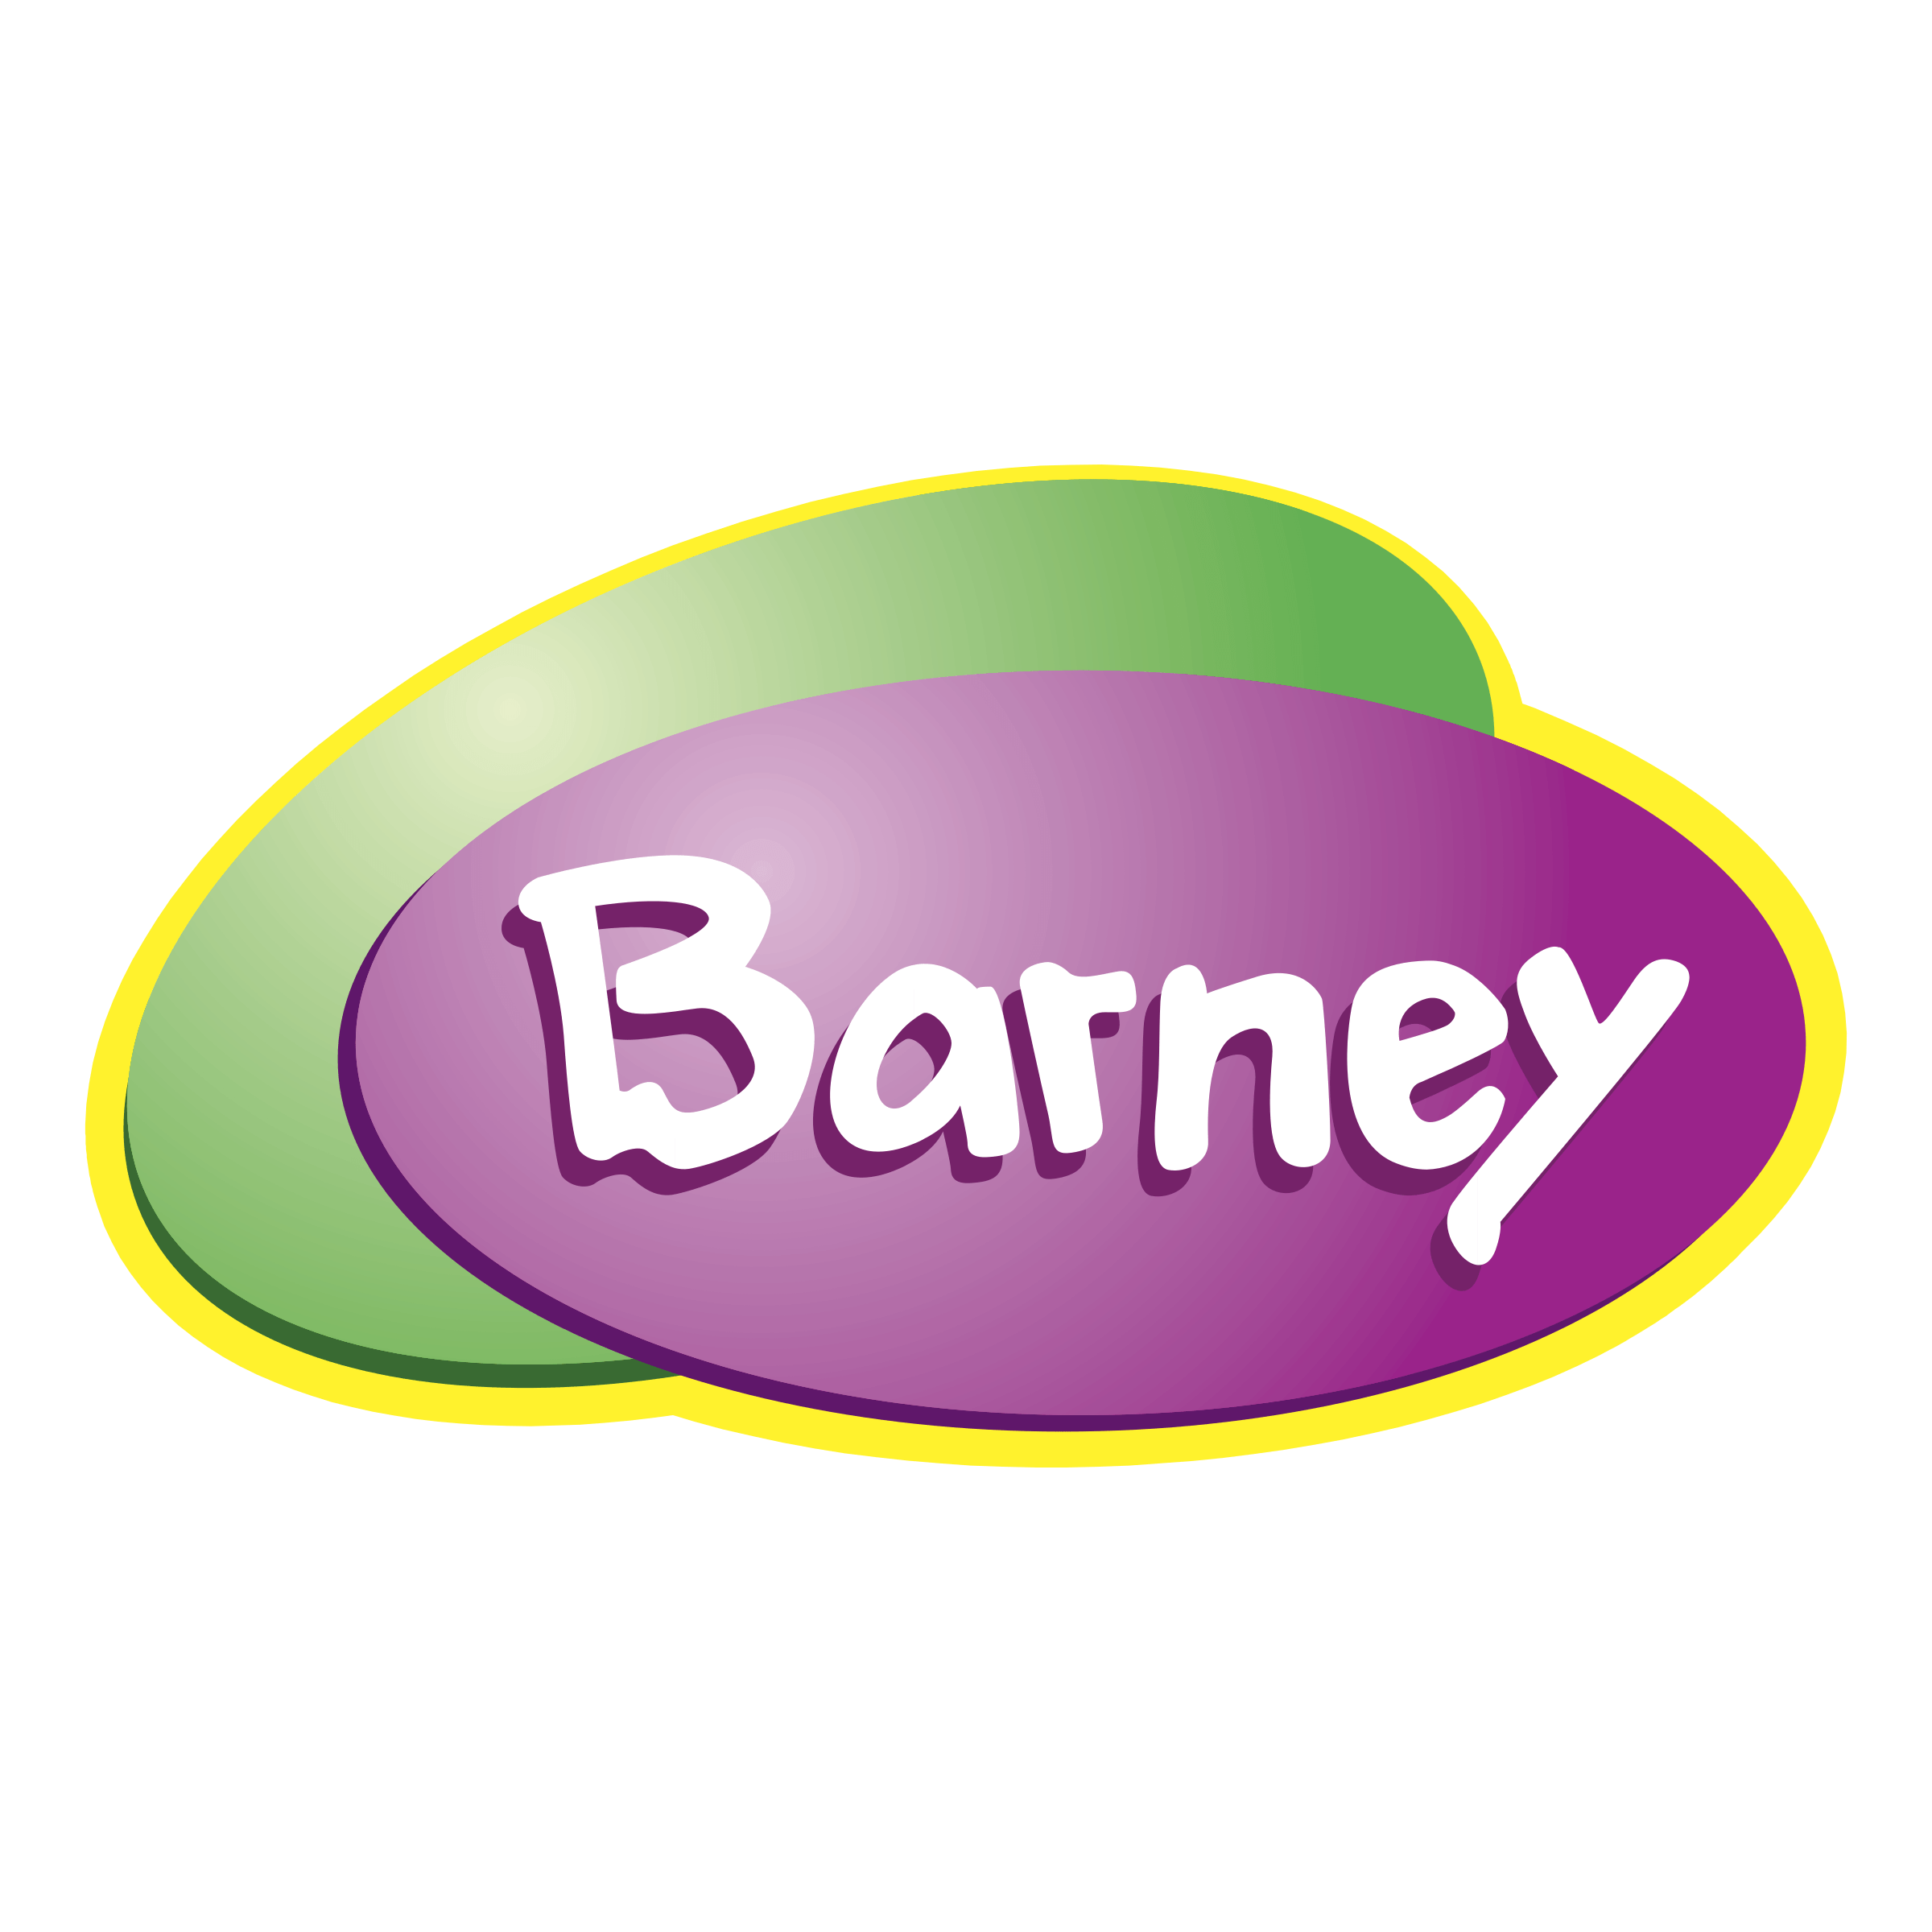 Barney Logo - Barney Logo PNG Transparent & SVG Vector - Freebie Supply